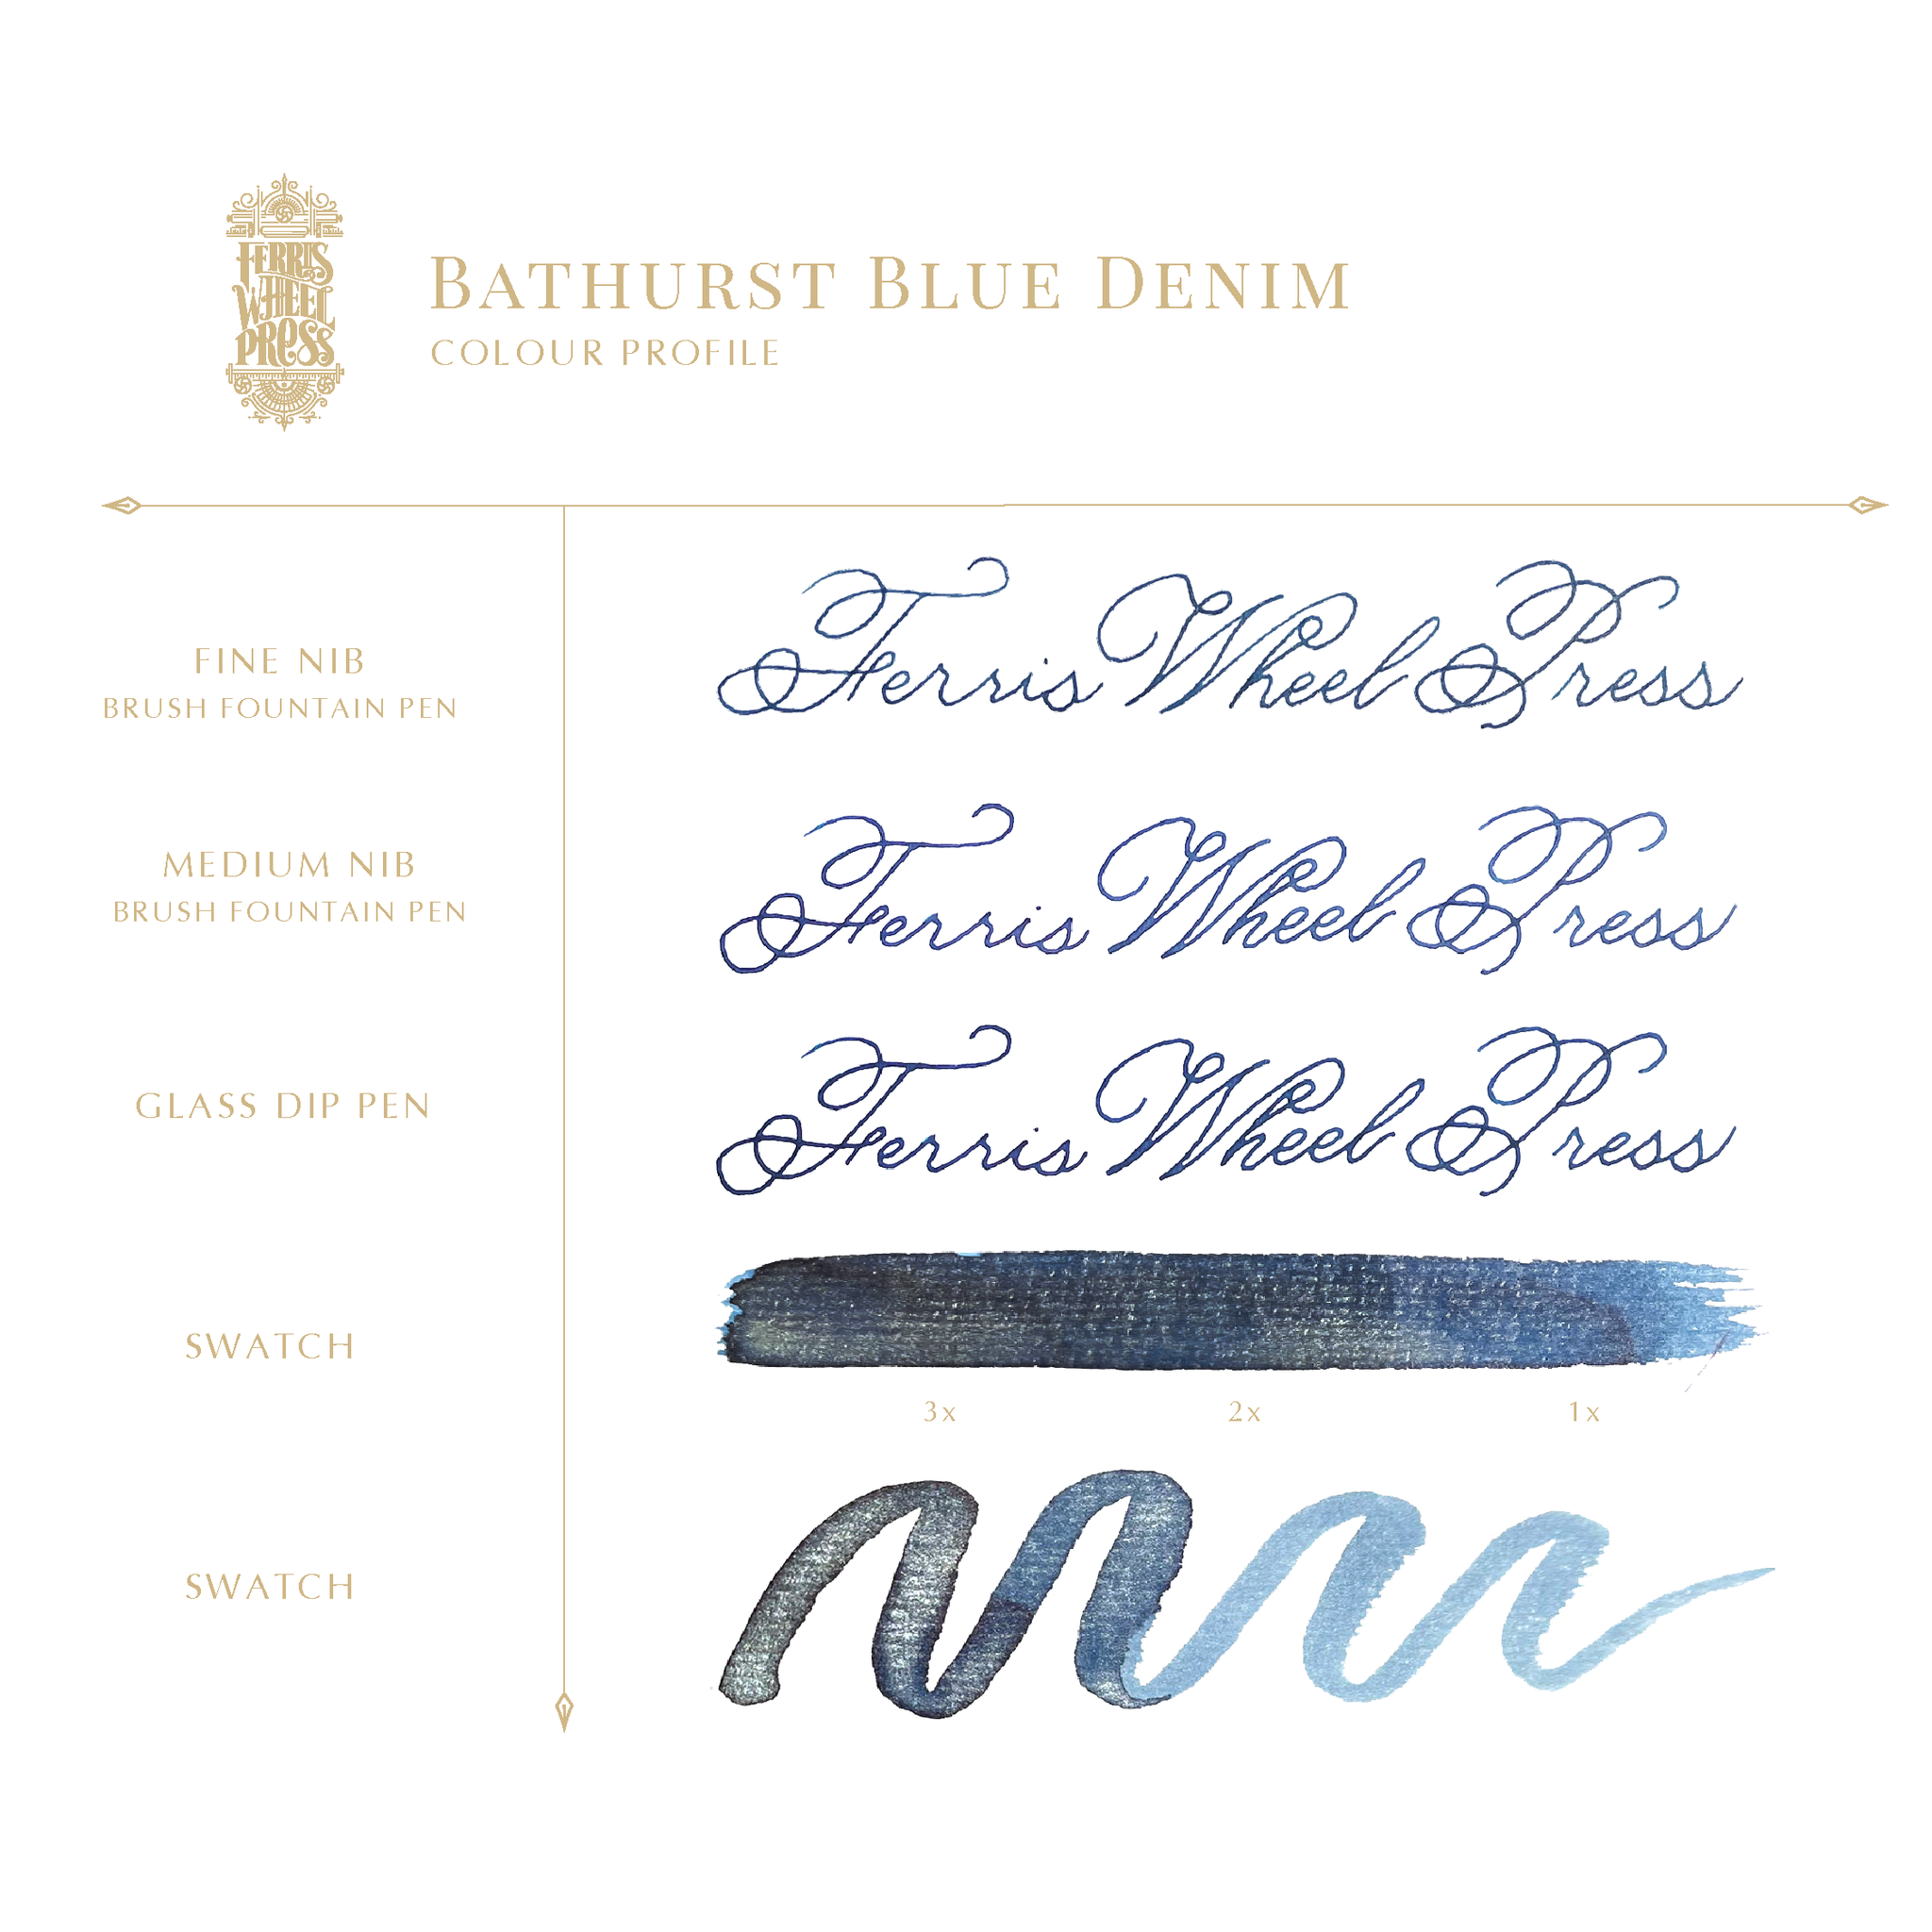 *Bathurst Blue Denim by Ferris Wheel Press (NEW Fashion District Ink) 38ml